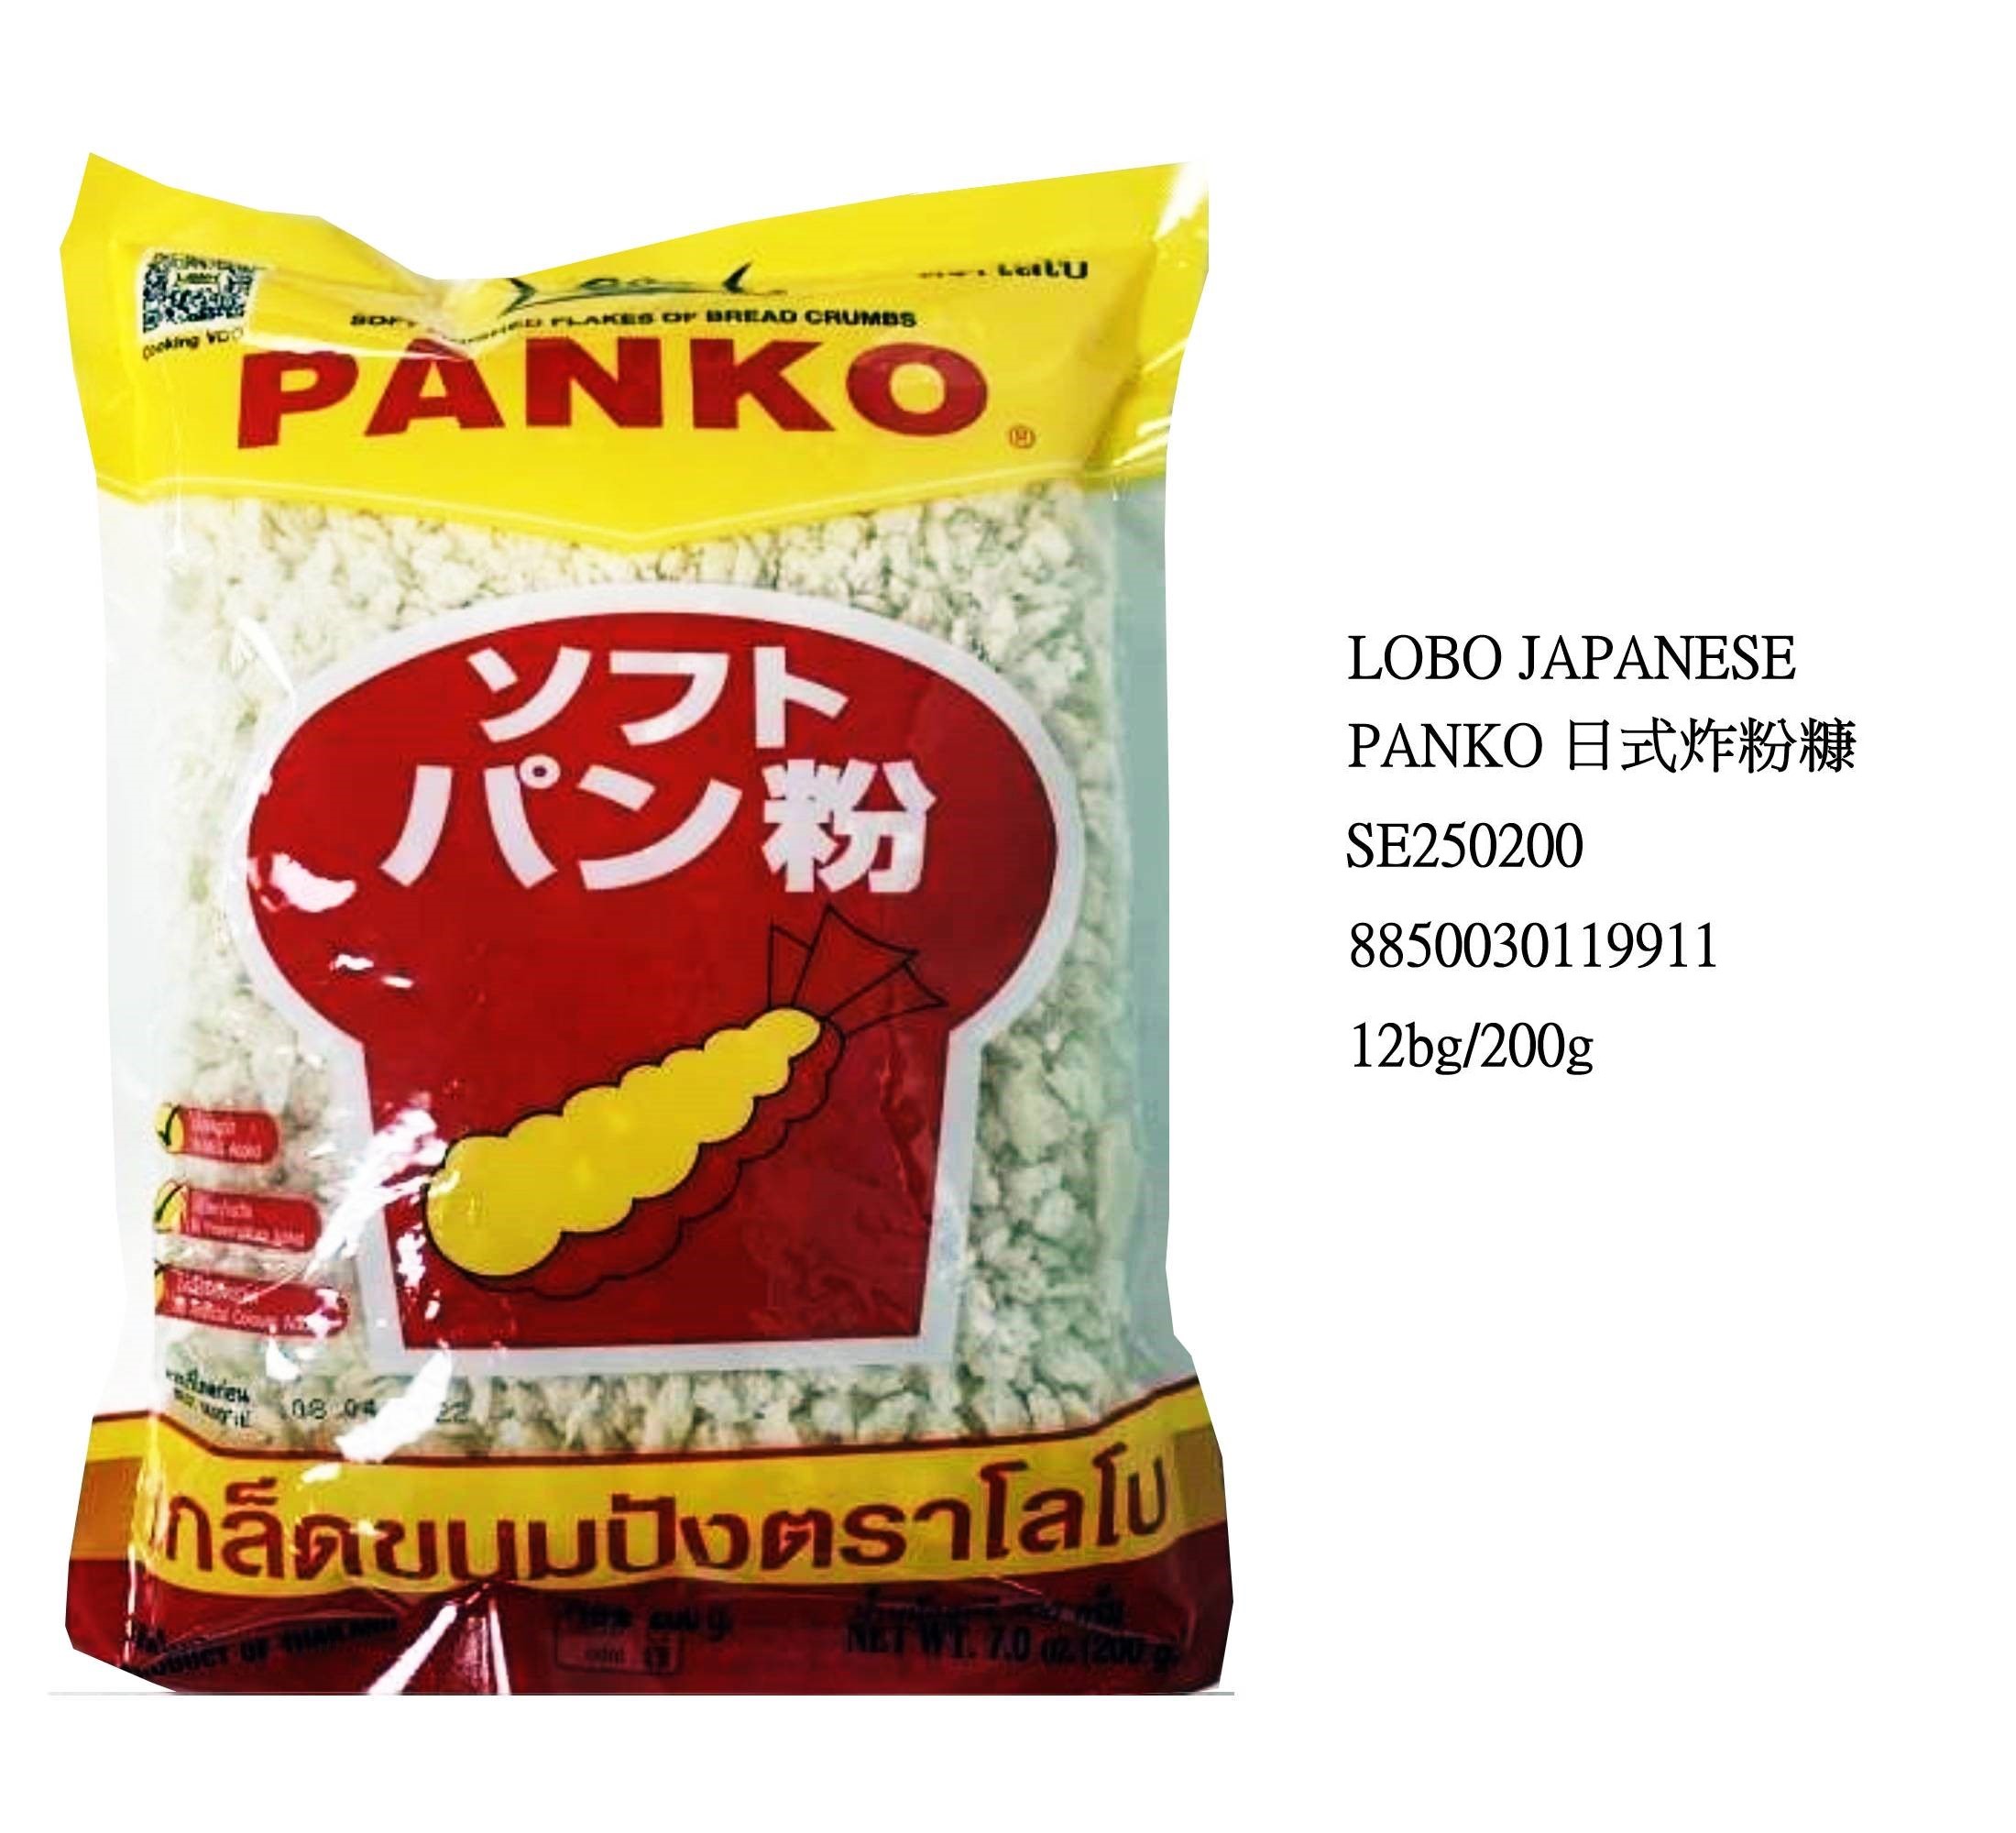 LOBO JAPANESE PANKO SE250200